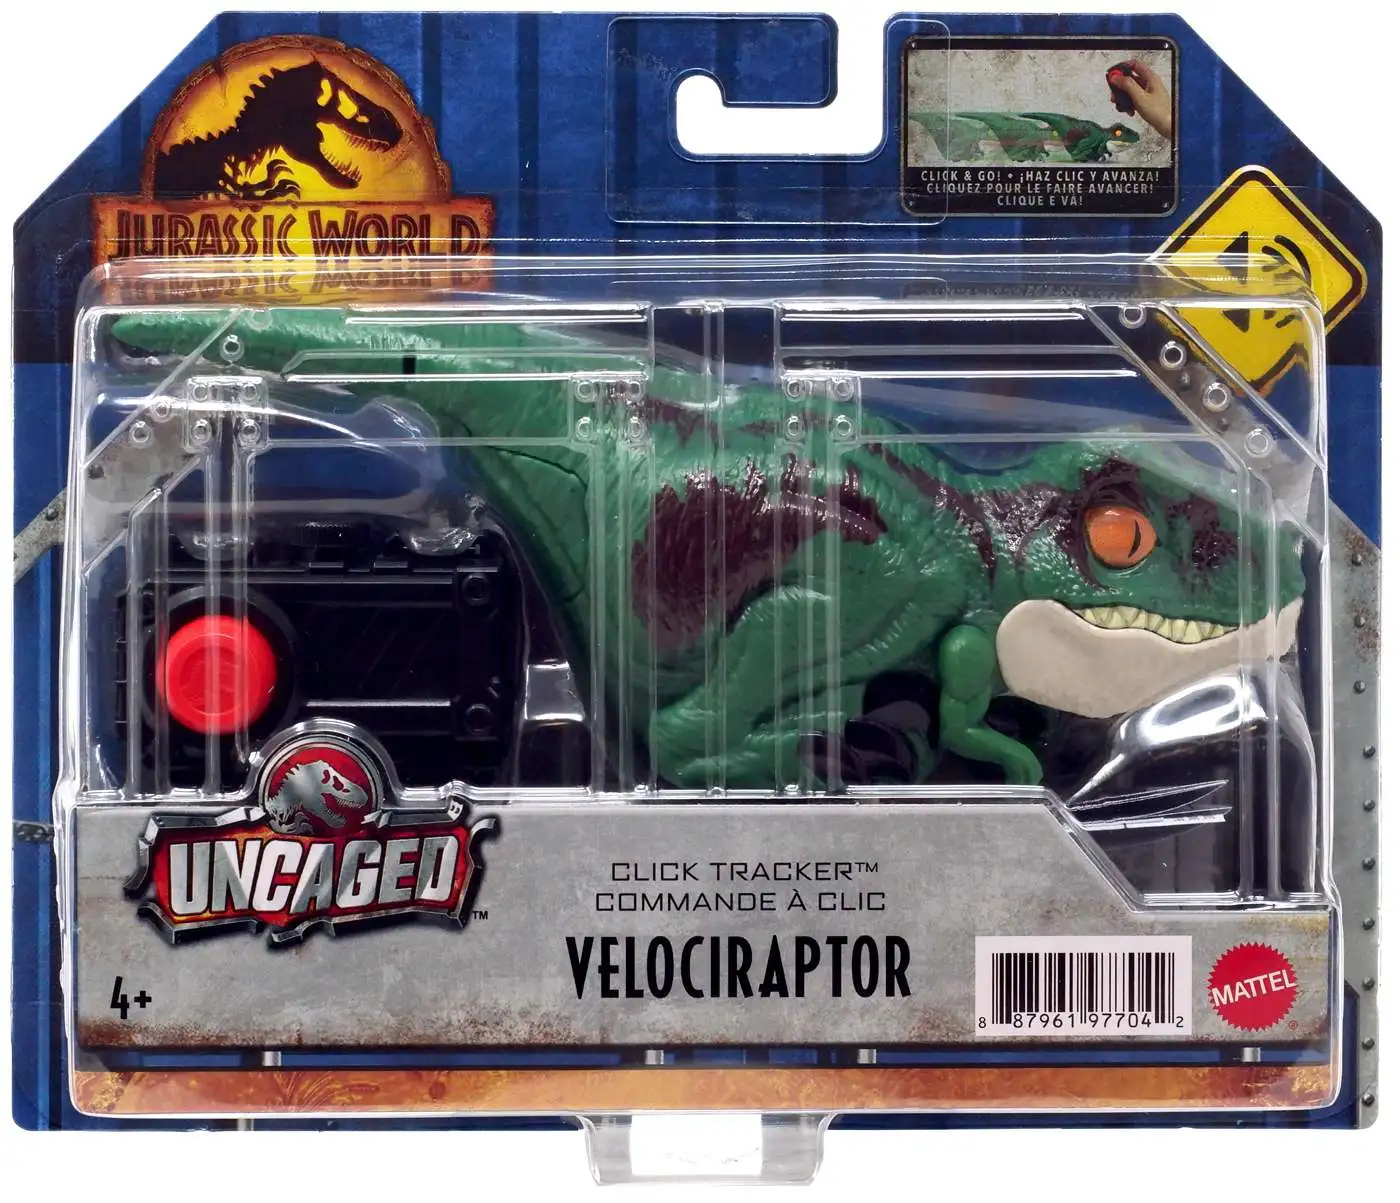 Jurassic World Dominion Uncaged Velociraptor Action Figure [Click Tracker, Green]